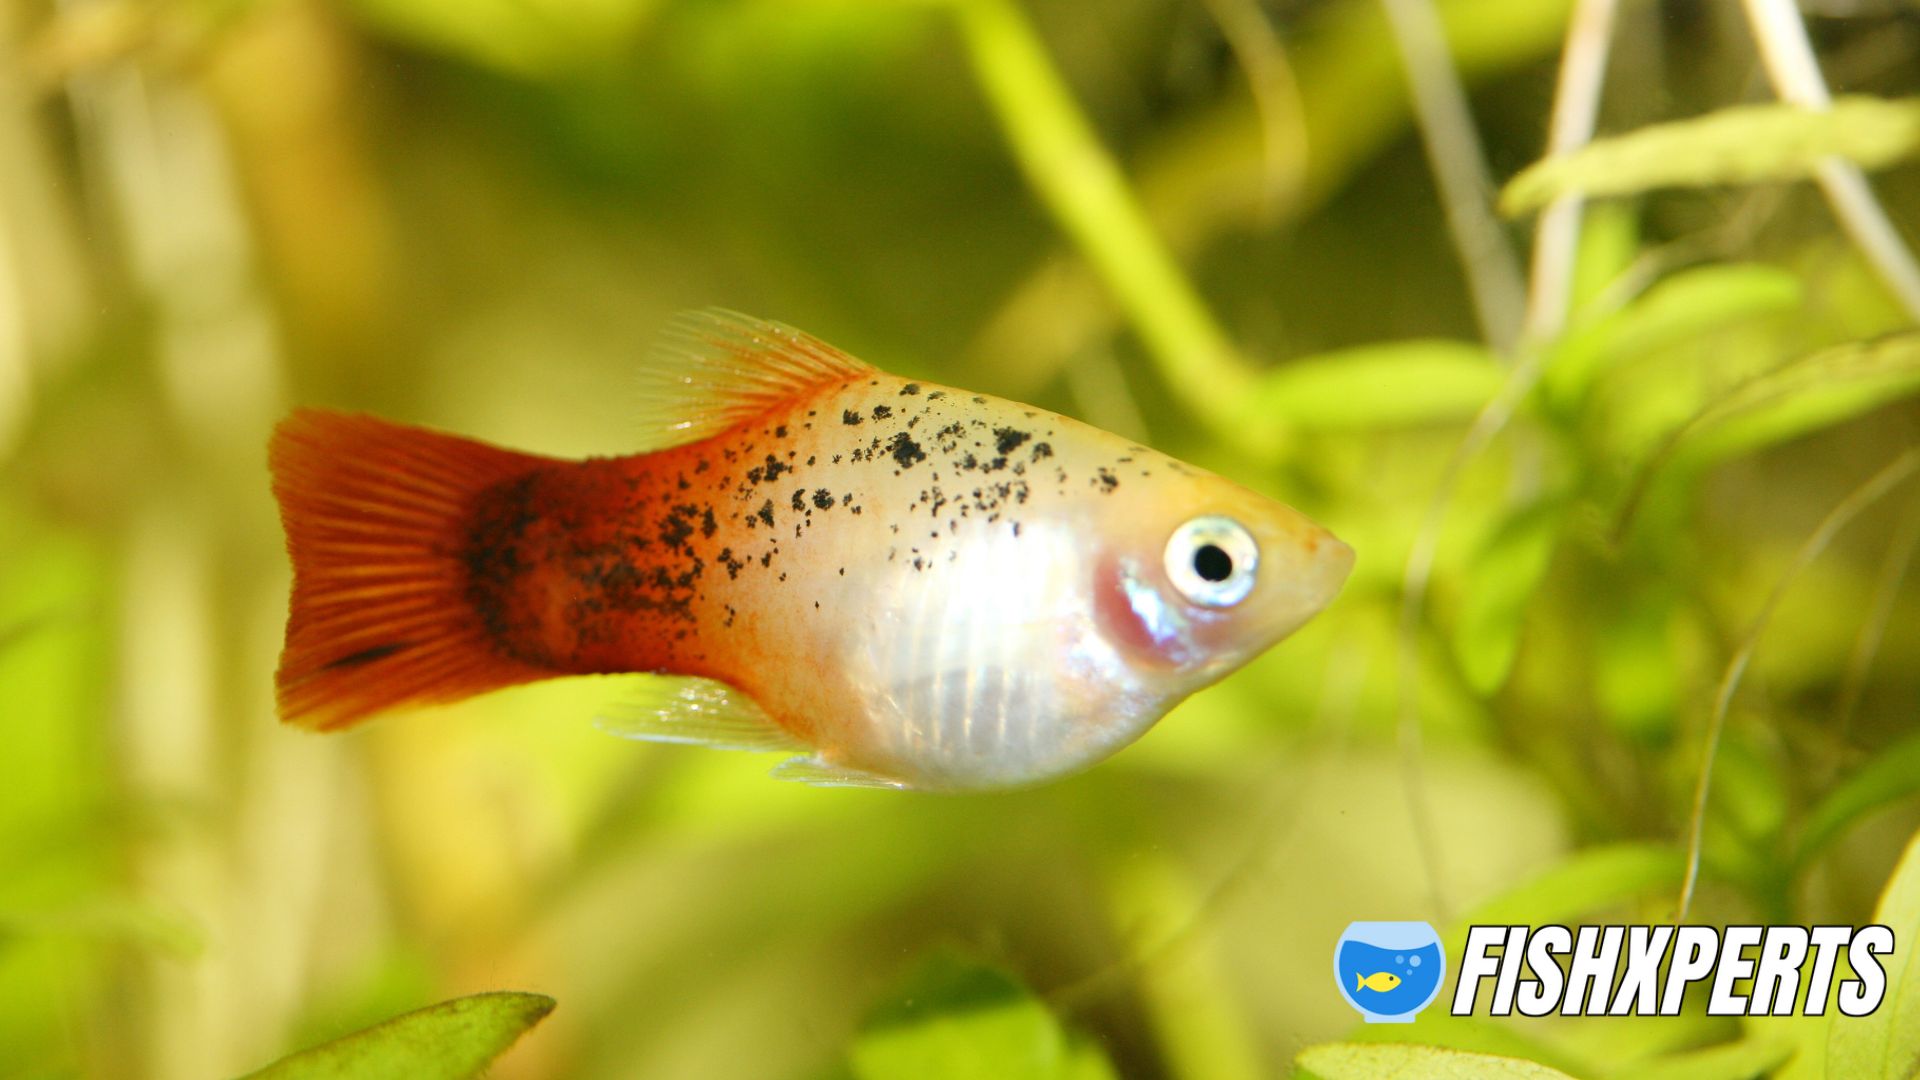 Platy fish(Xiphophorus maculatus), a popular freshwater aquarium